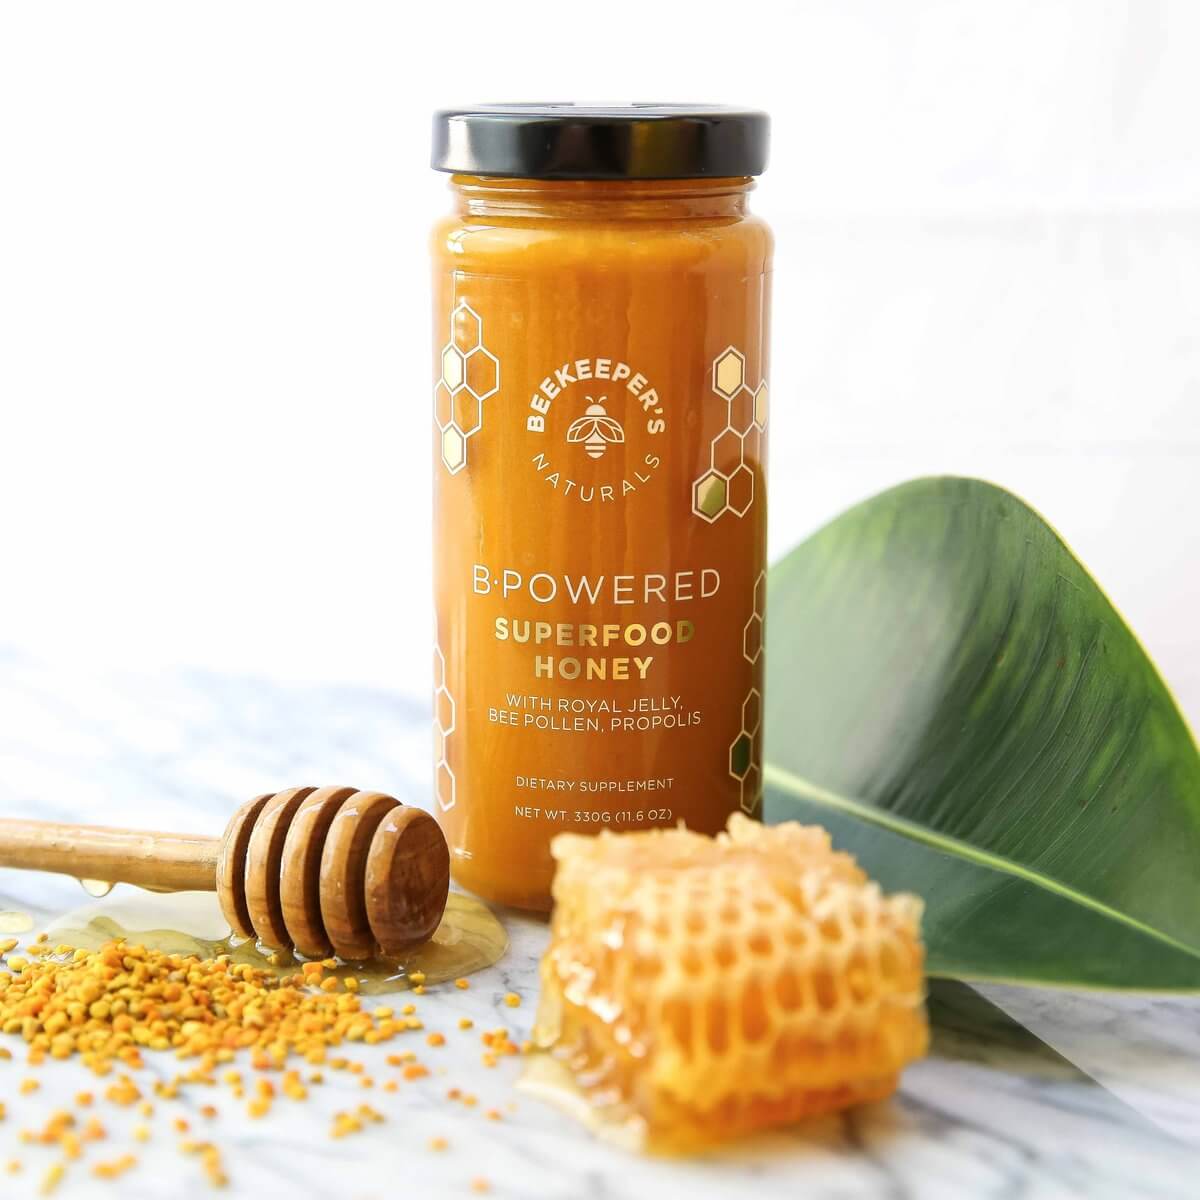 B.POWERED Superfood Honey by Beekeeper's Naturals Wellness Beekeeper's Naturals Prettycleanshop